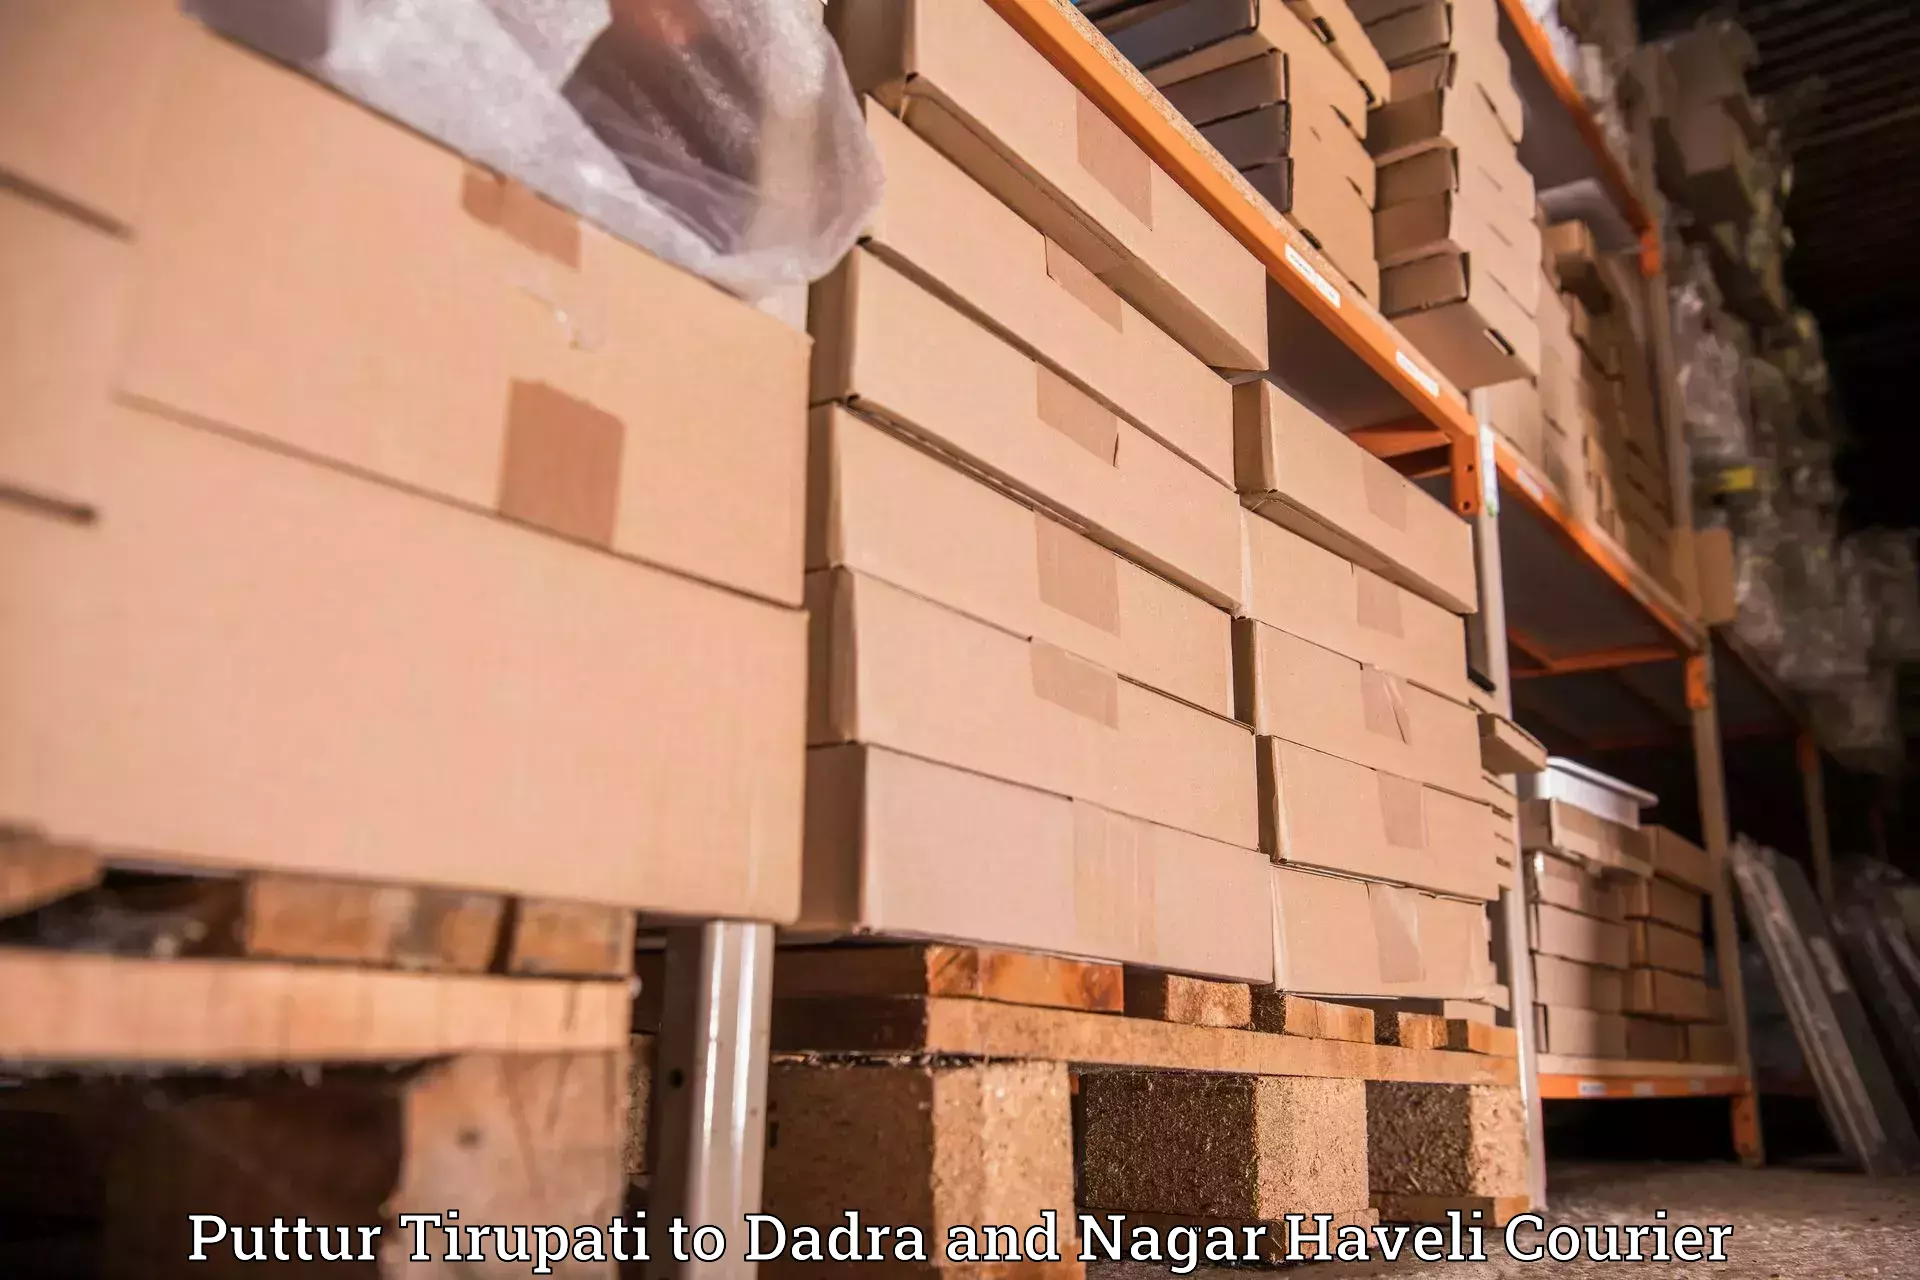 Efficient cargo handling Puttur Tirupati to Dadra and Nagar Haveli